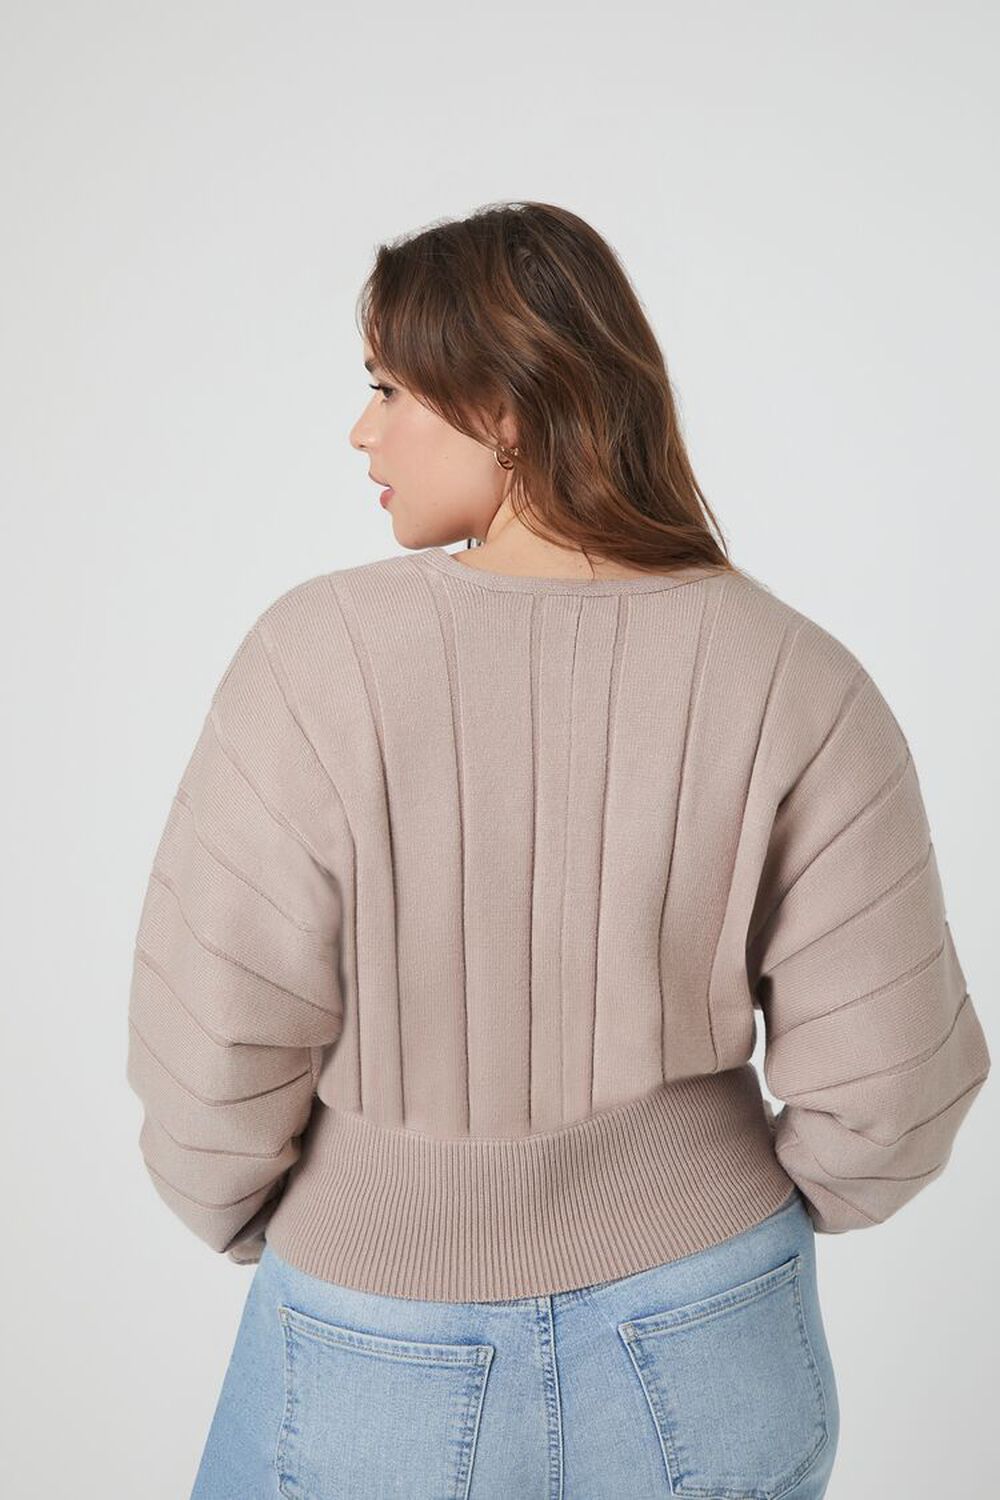 GOAT Plus Size Plunging Dolman-Sleeve Sweater, image 3